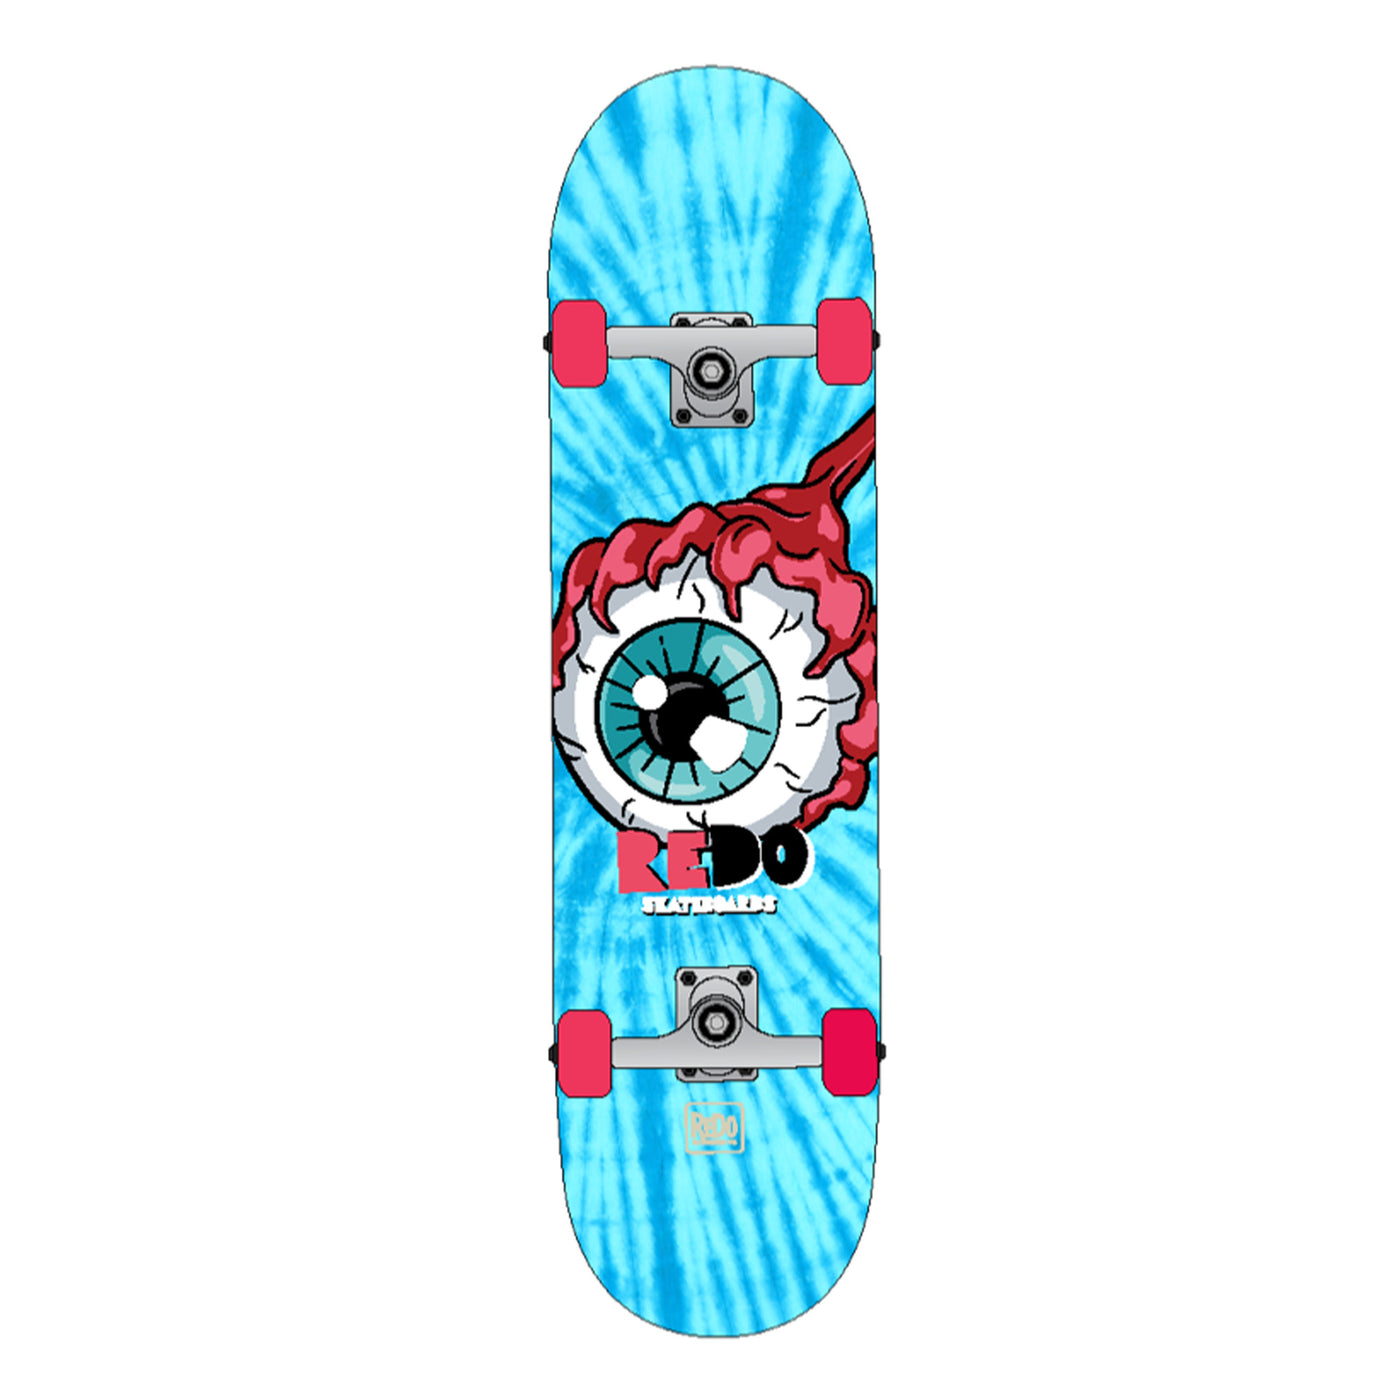 Redo Gallery Pop Complete Eyeball Skateboard